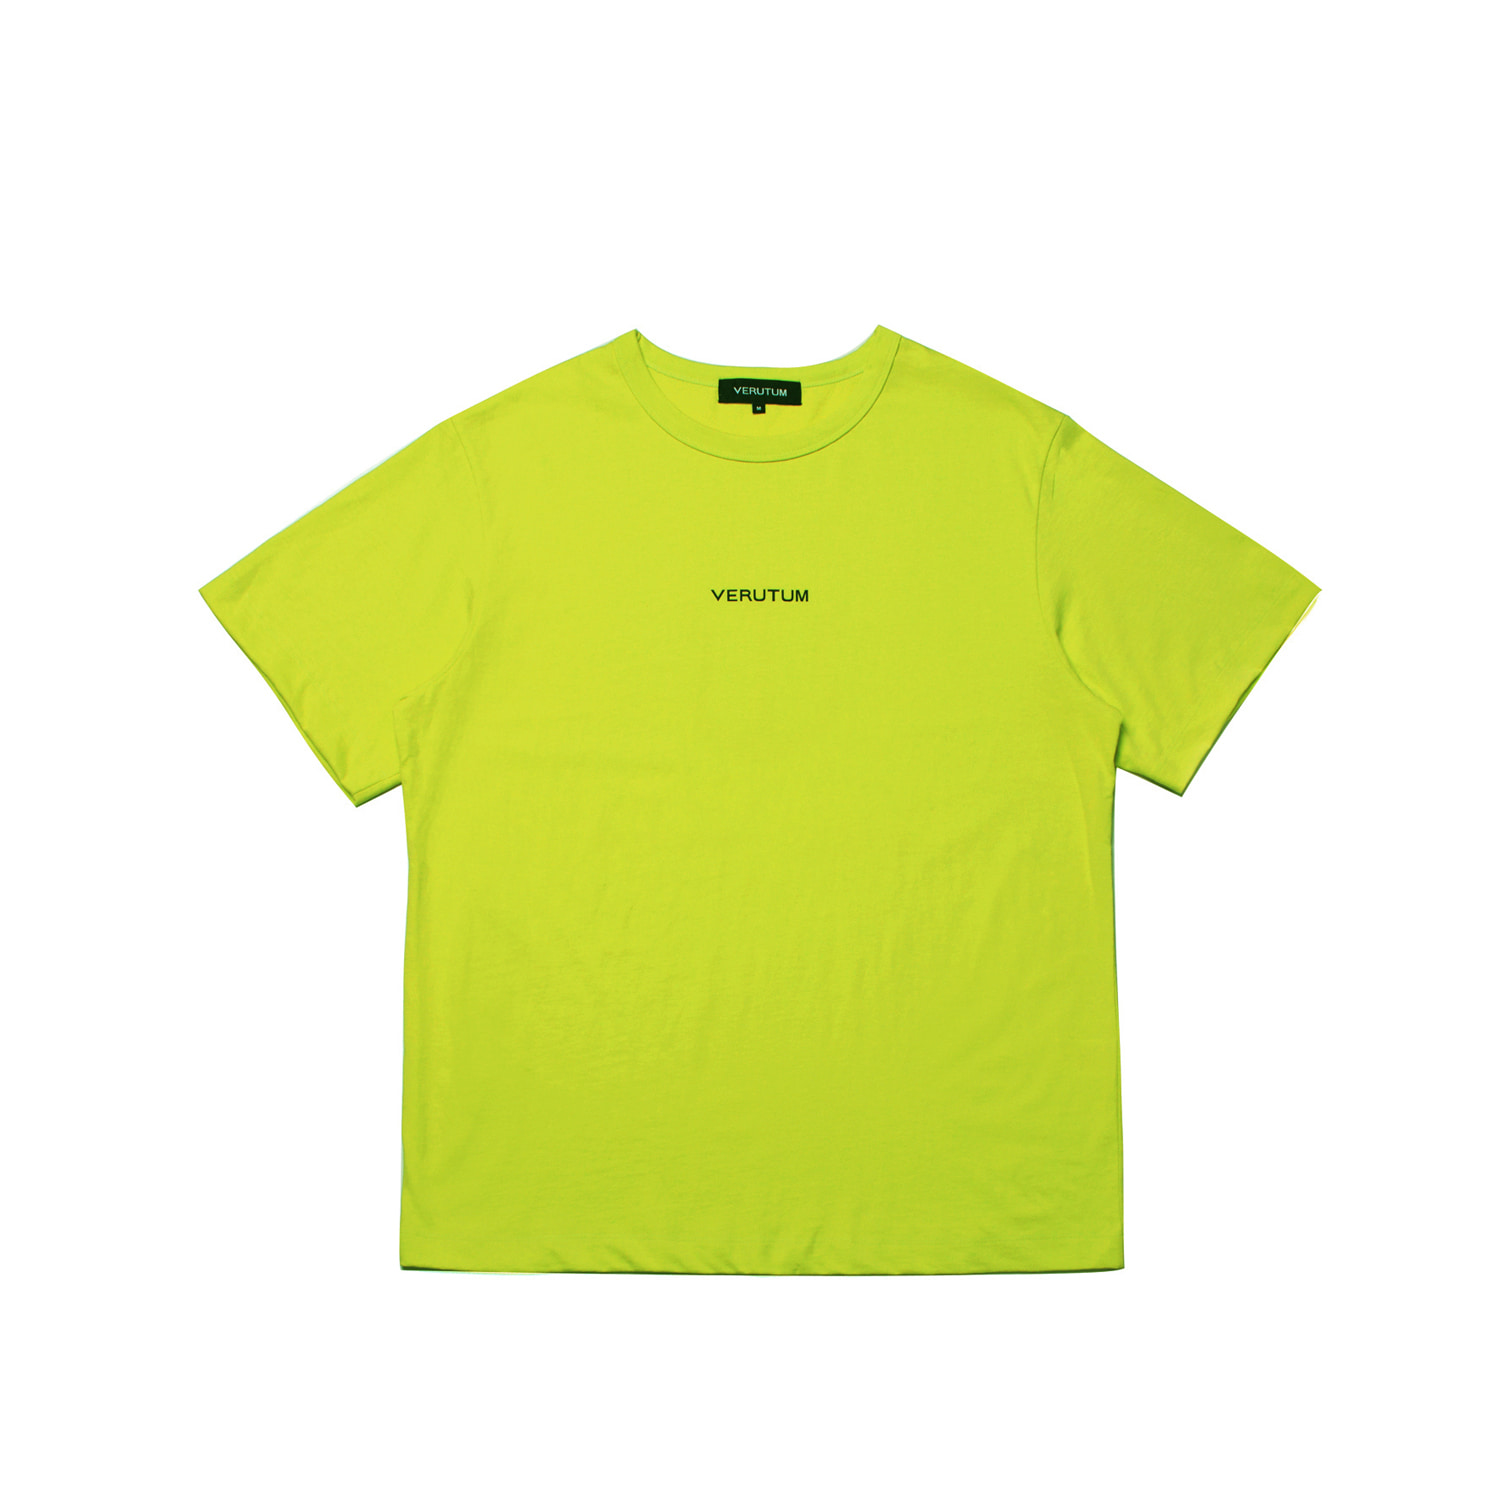 RTW-TS029 : Overfit Half-Sleeve T-shirtsㅣYellow Green